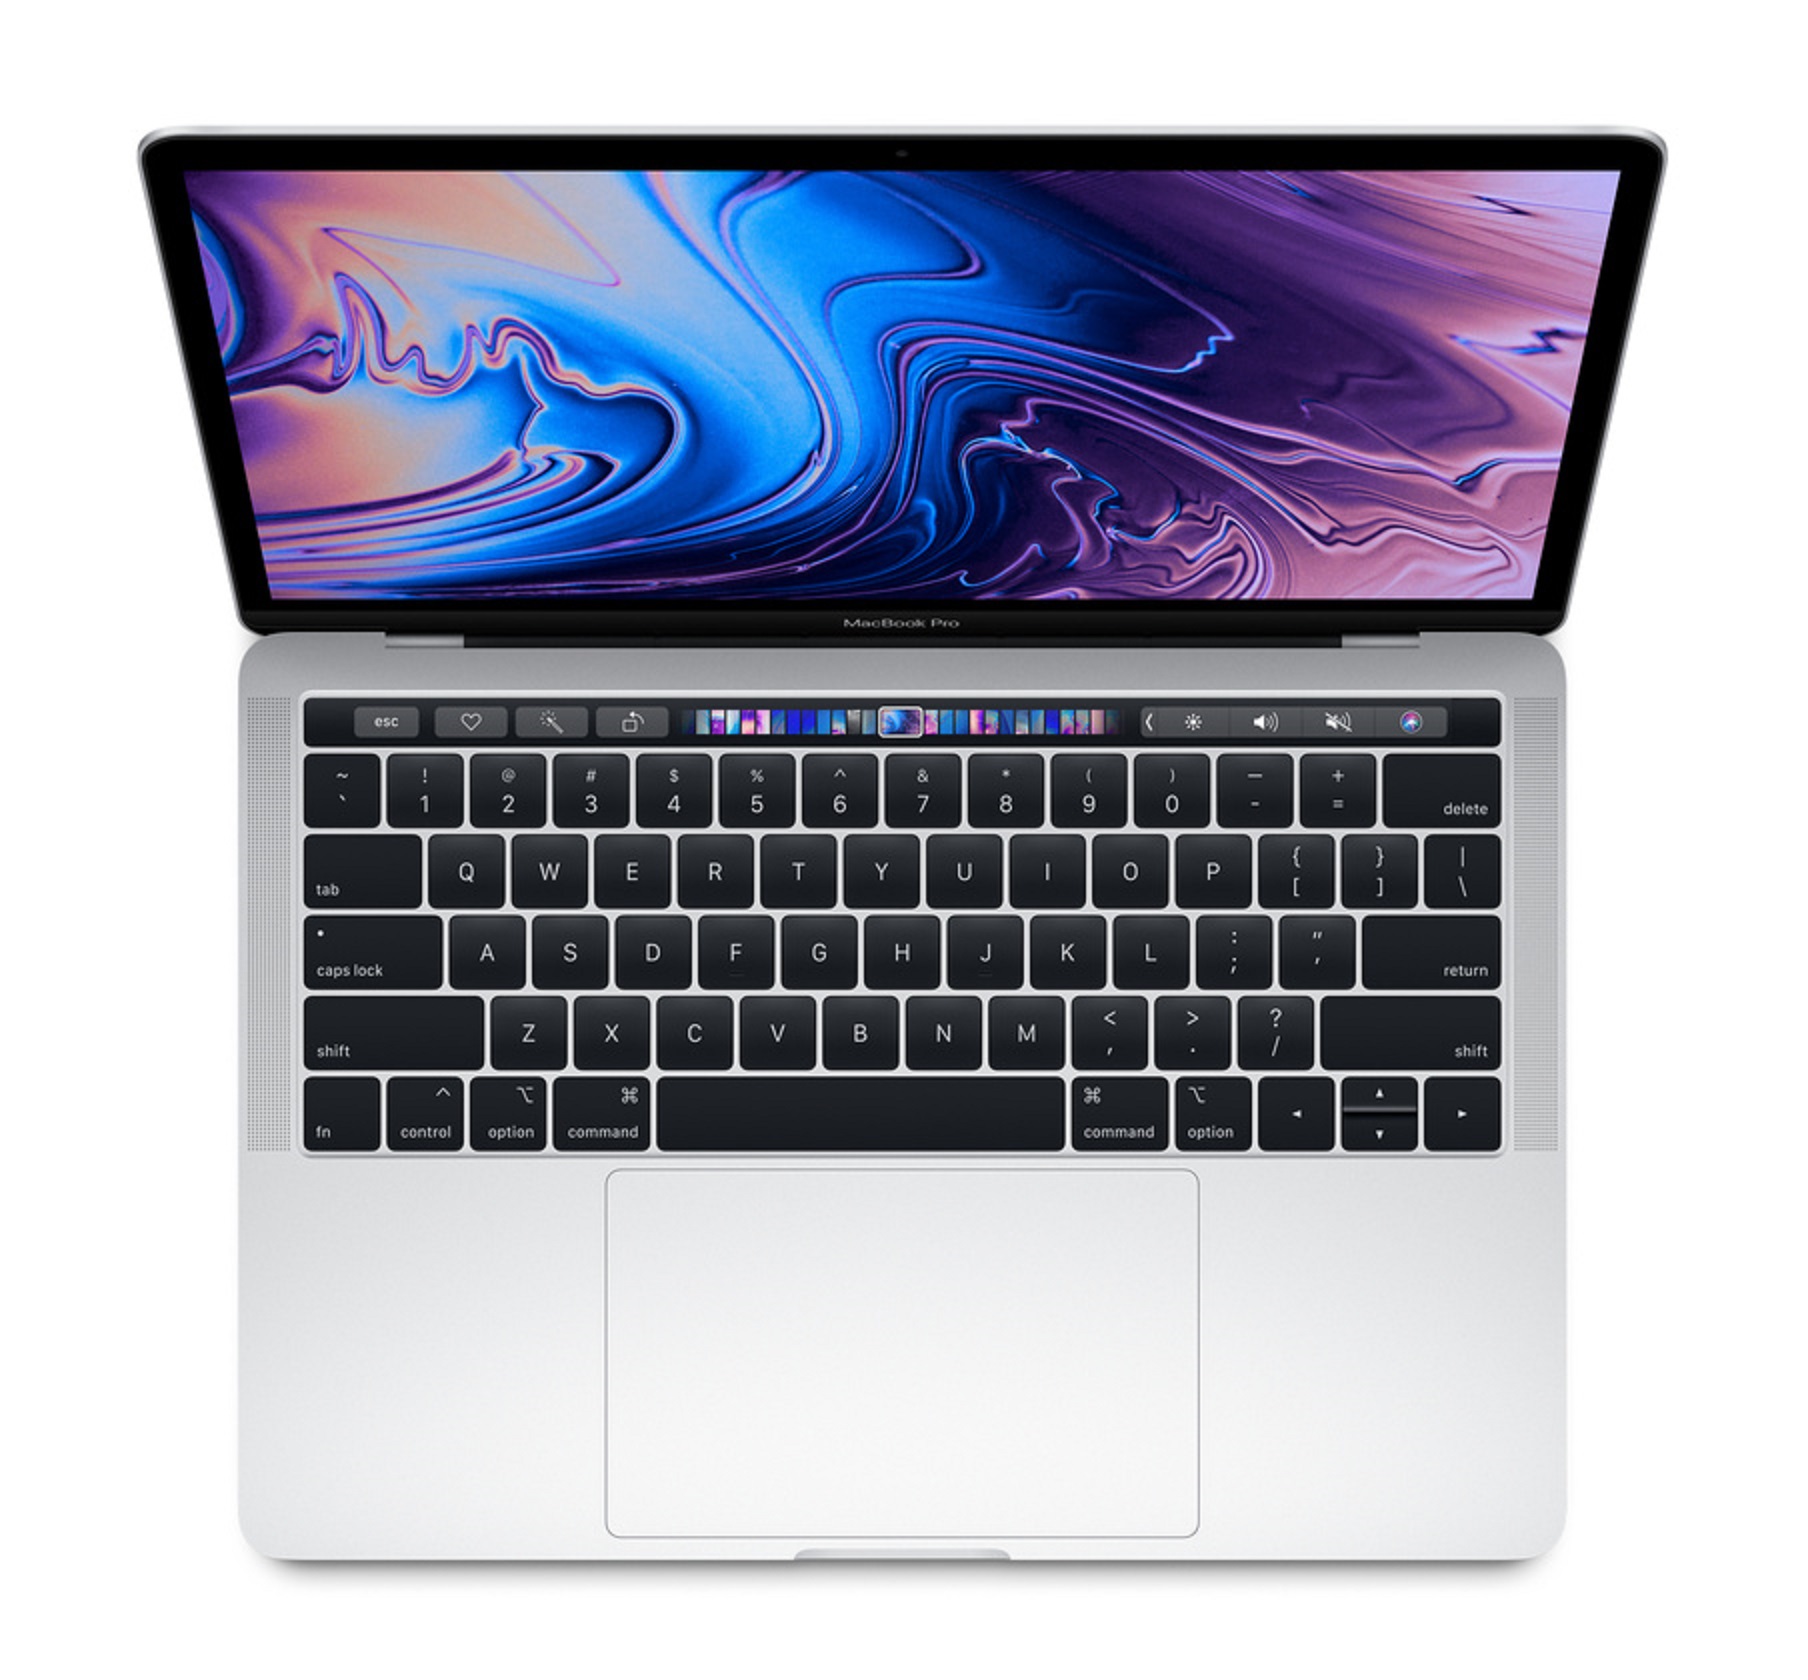 MacBook Pro 13-Inch Core i7-8559U 2.7GHz Touch 2018 CTO ram 8GB 16GB SSD 256GB 512GB 1TB A1989 EMC 3214